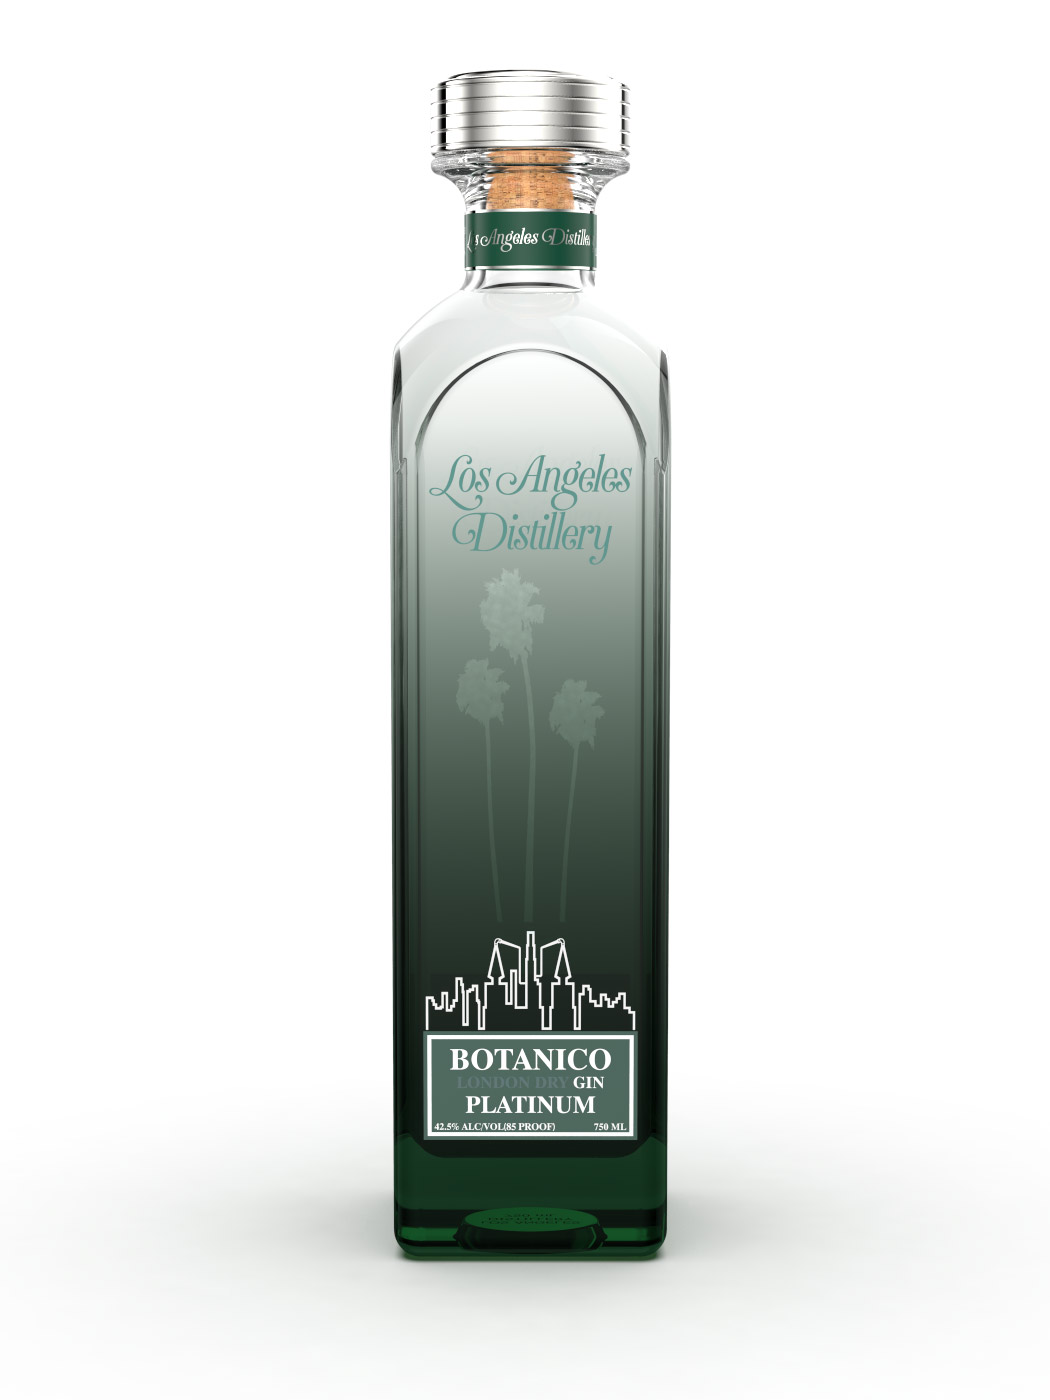 Botanico London Dry Gin Platinum from Los Angeles Craft Distillery